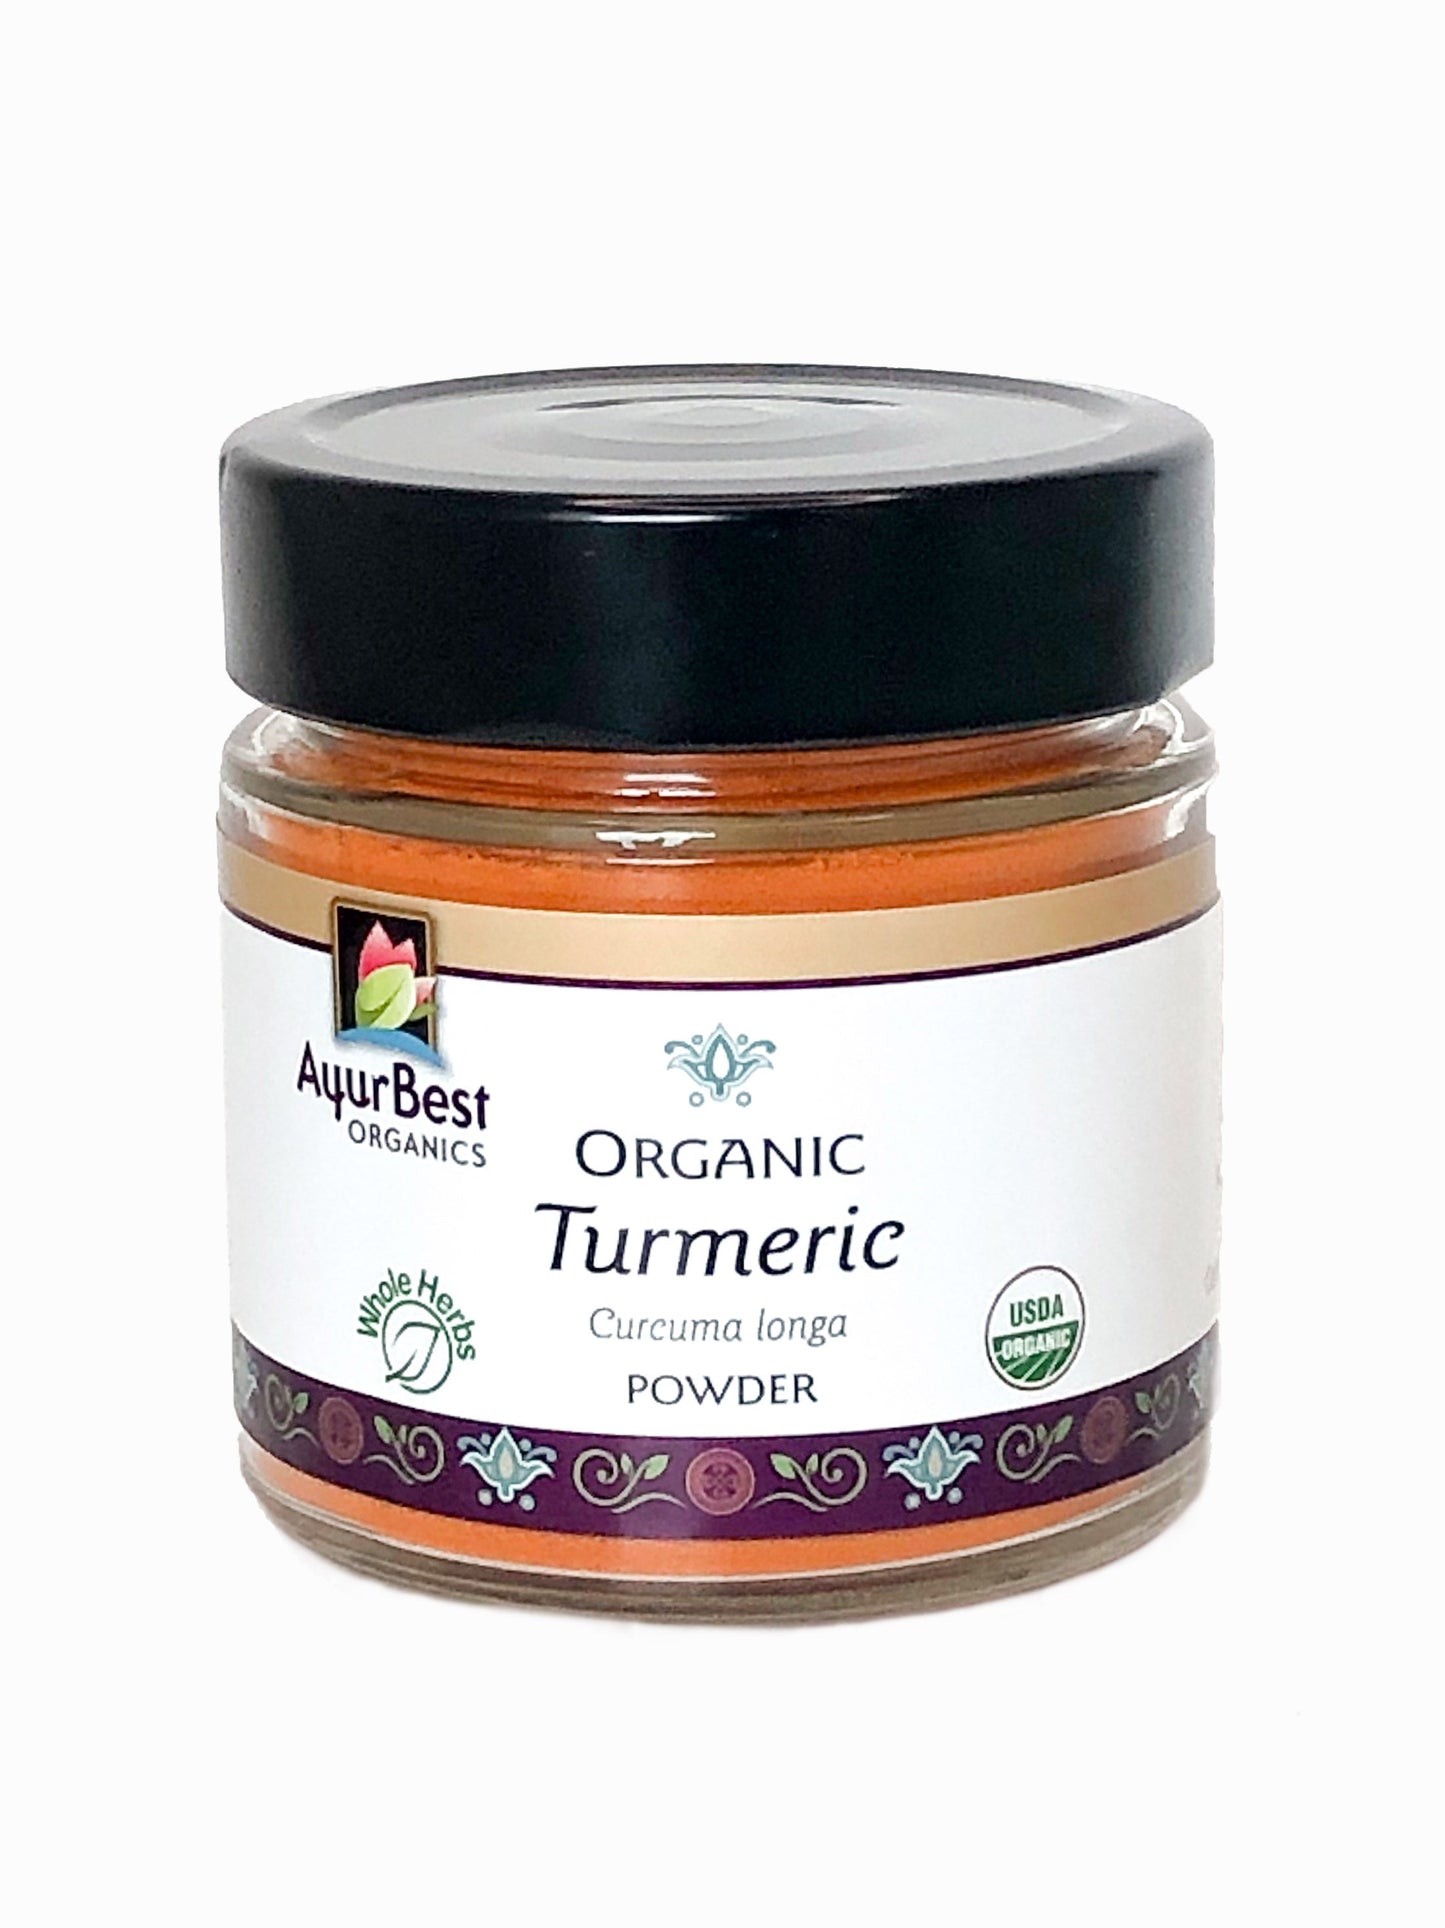 Wholesale Spices & Herbs - Turmeric Powder, Organic 4.8 oz (137.5g) Jar